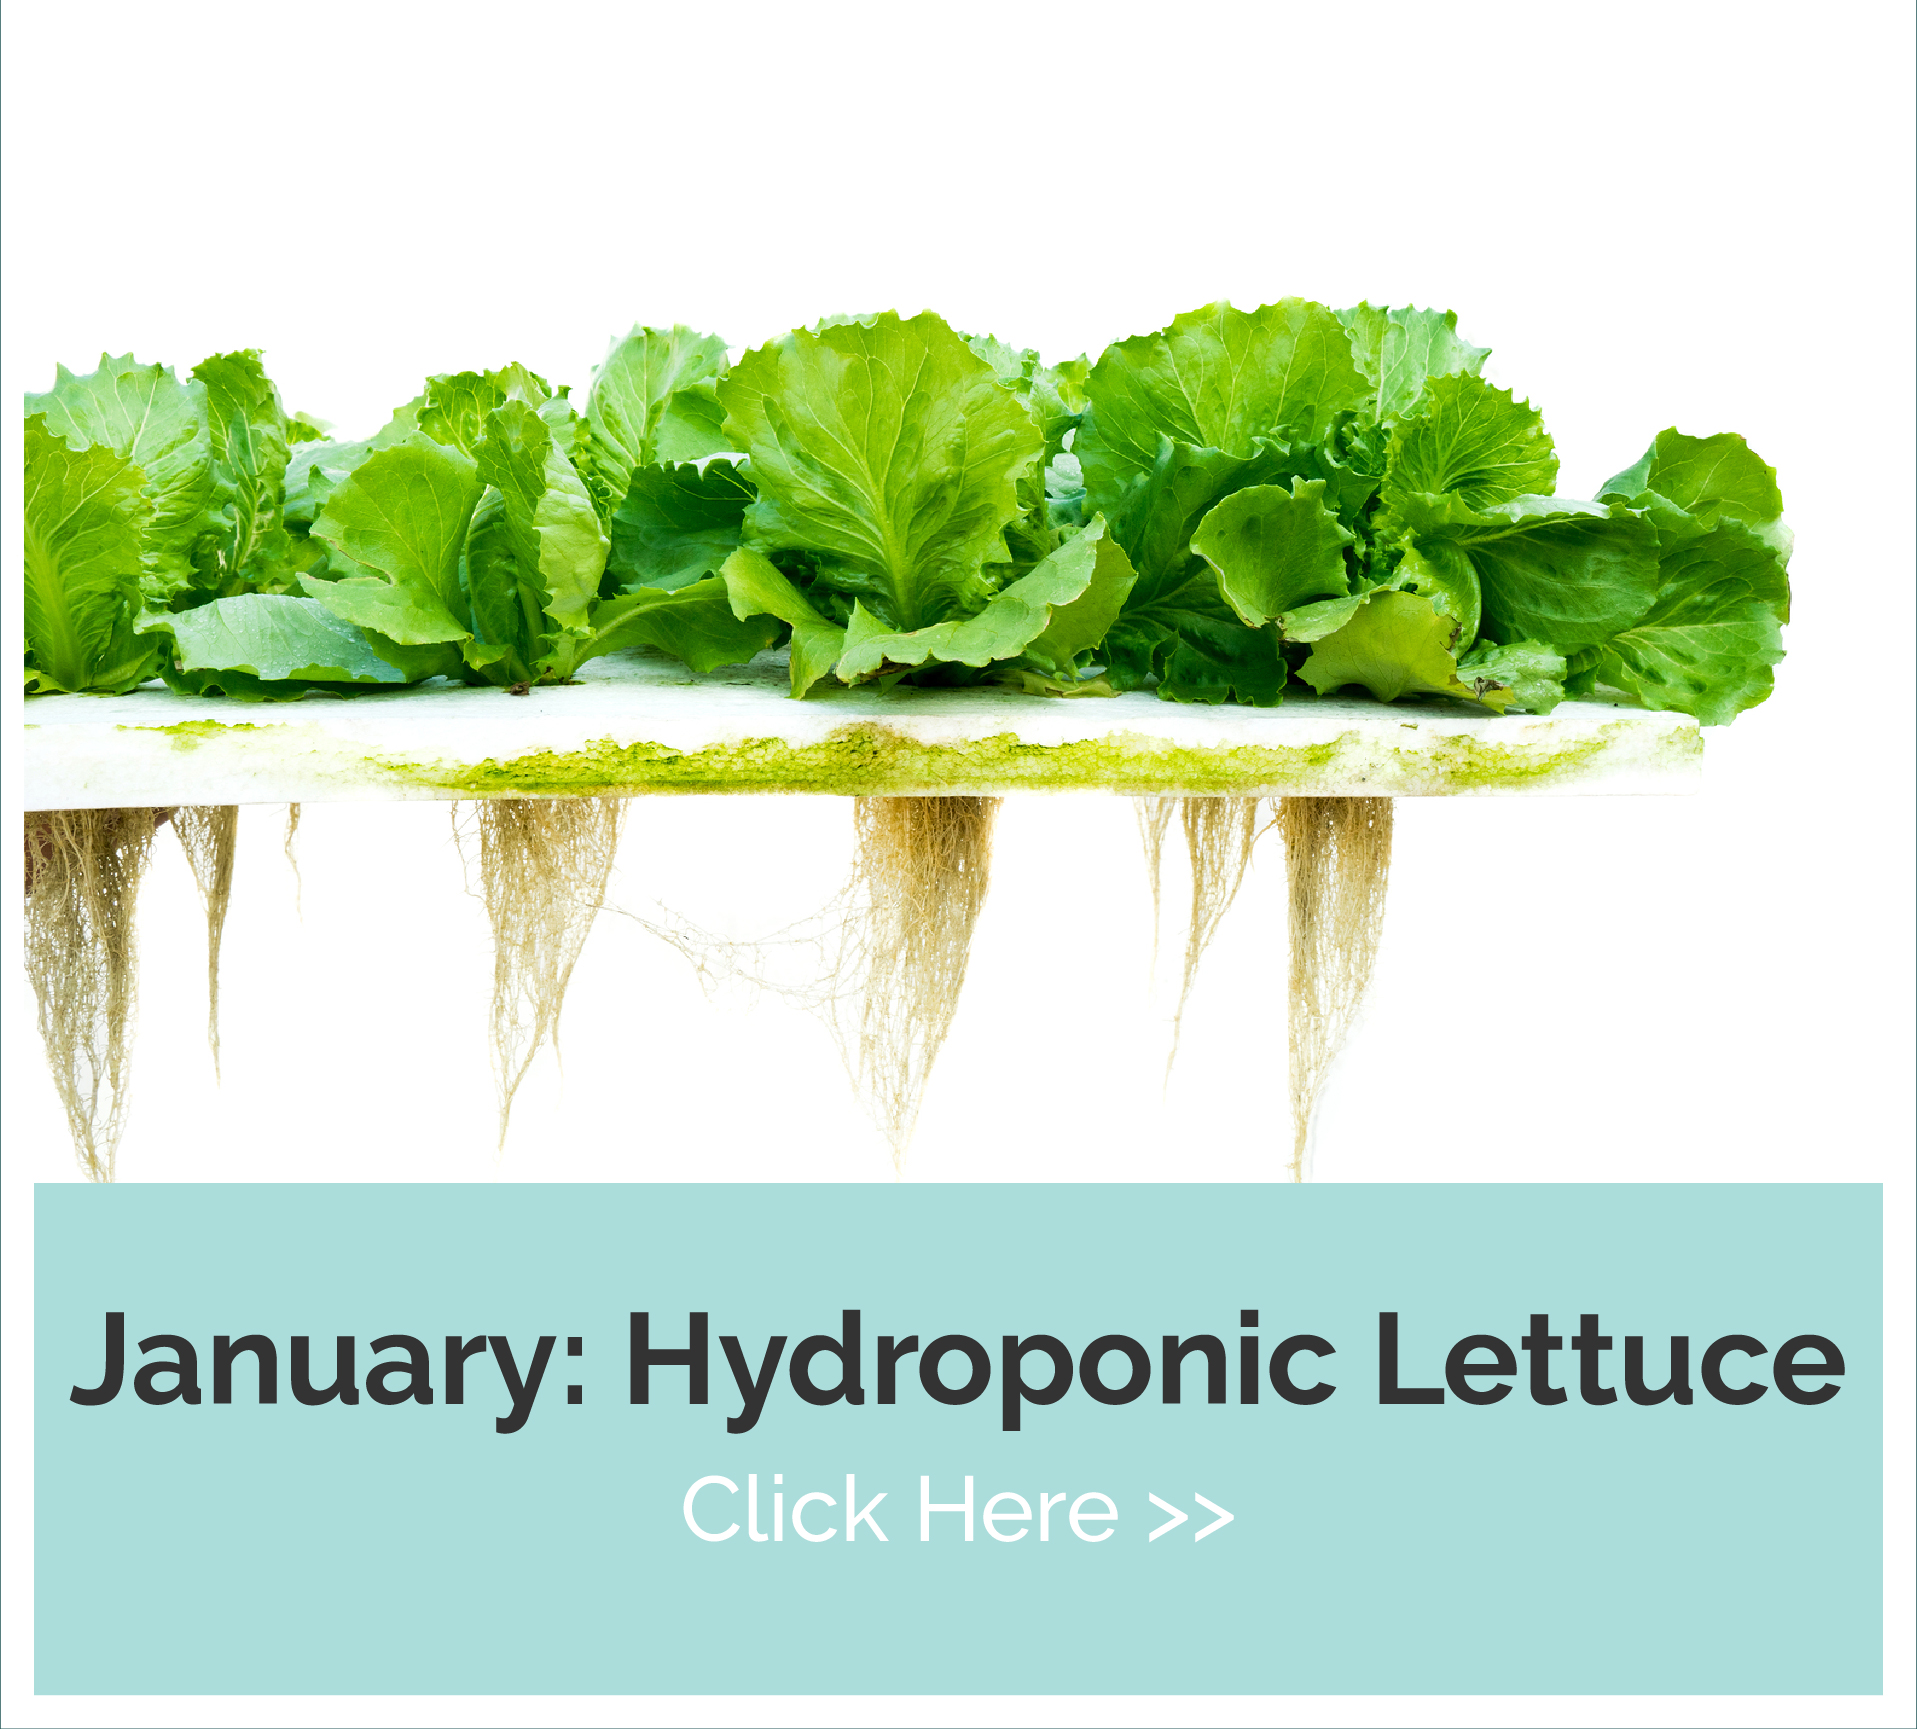 january lettuce - click here